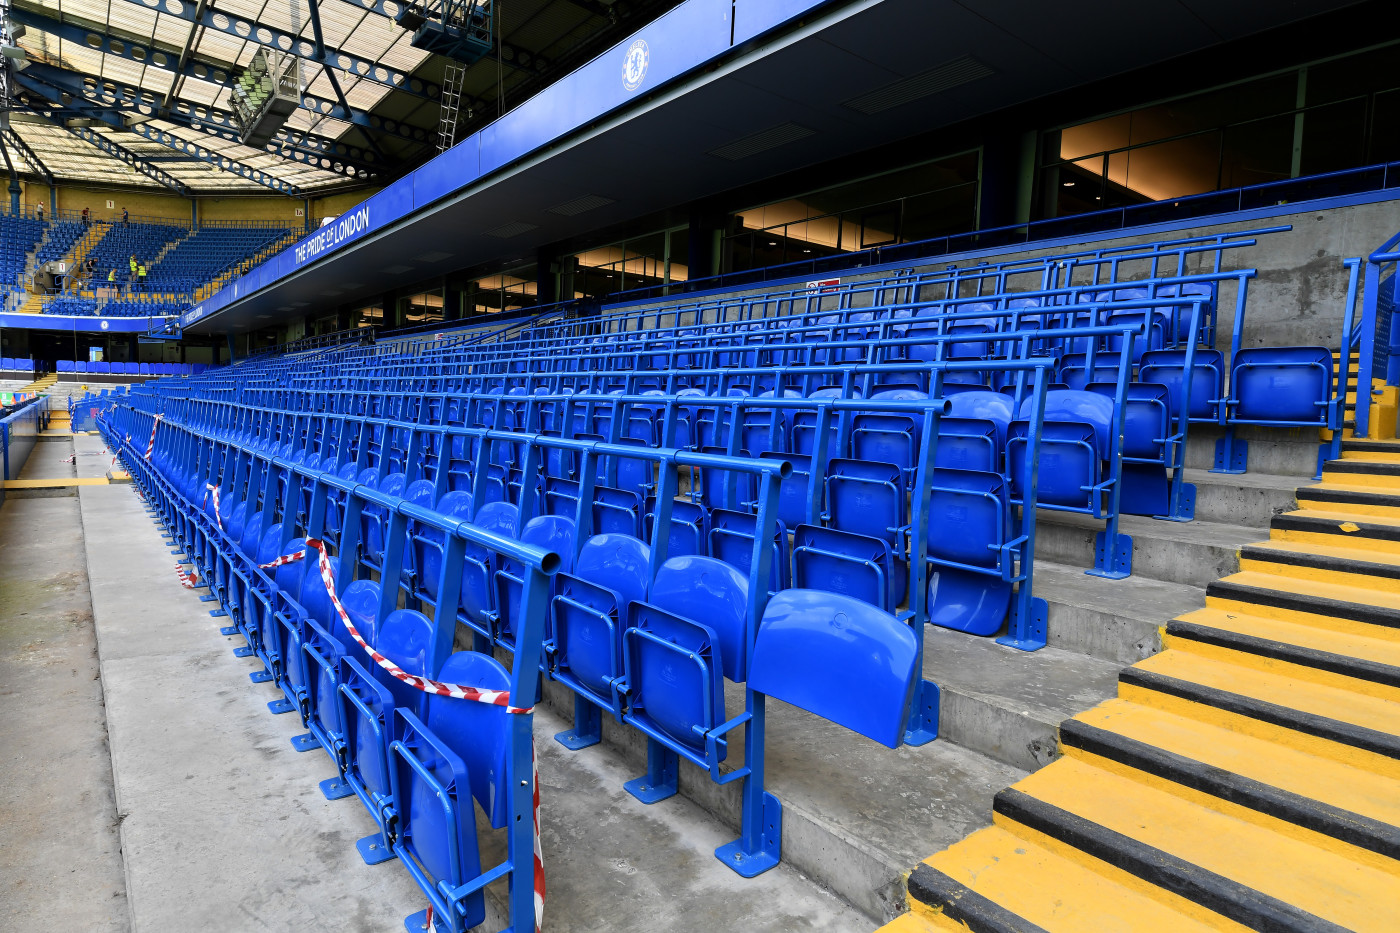 Stamford Bridge has a fresh look!